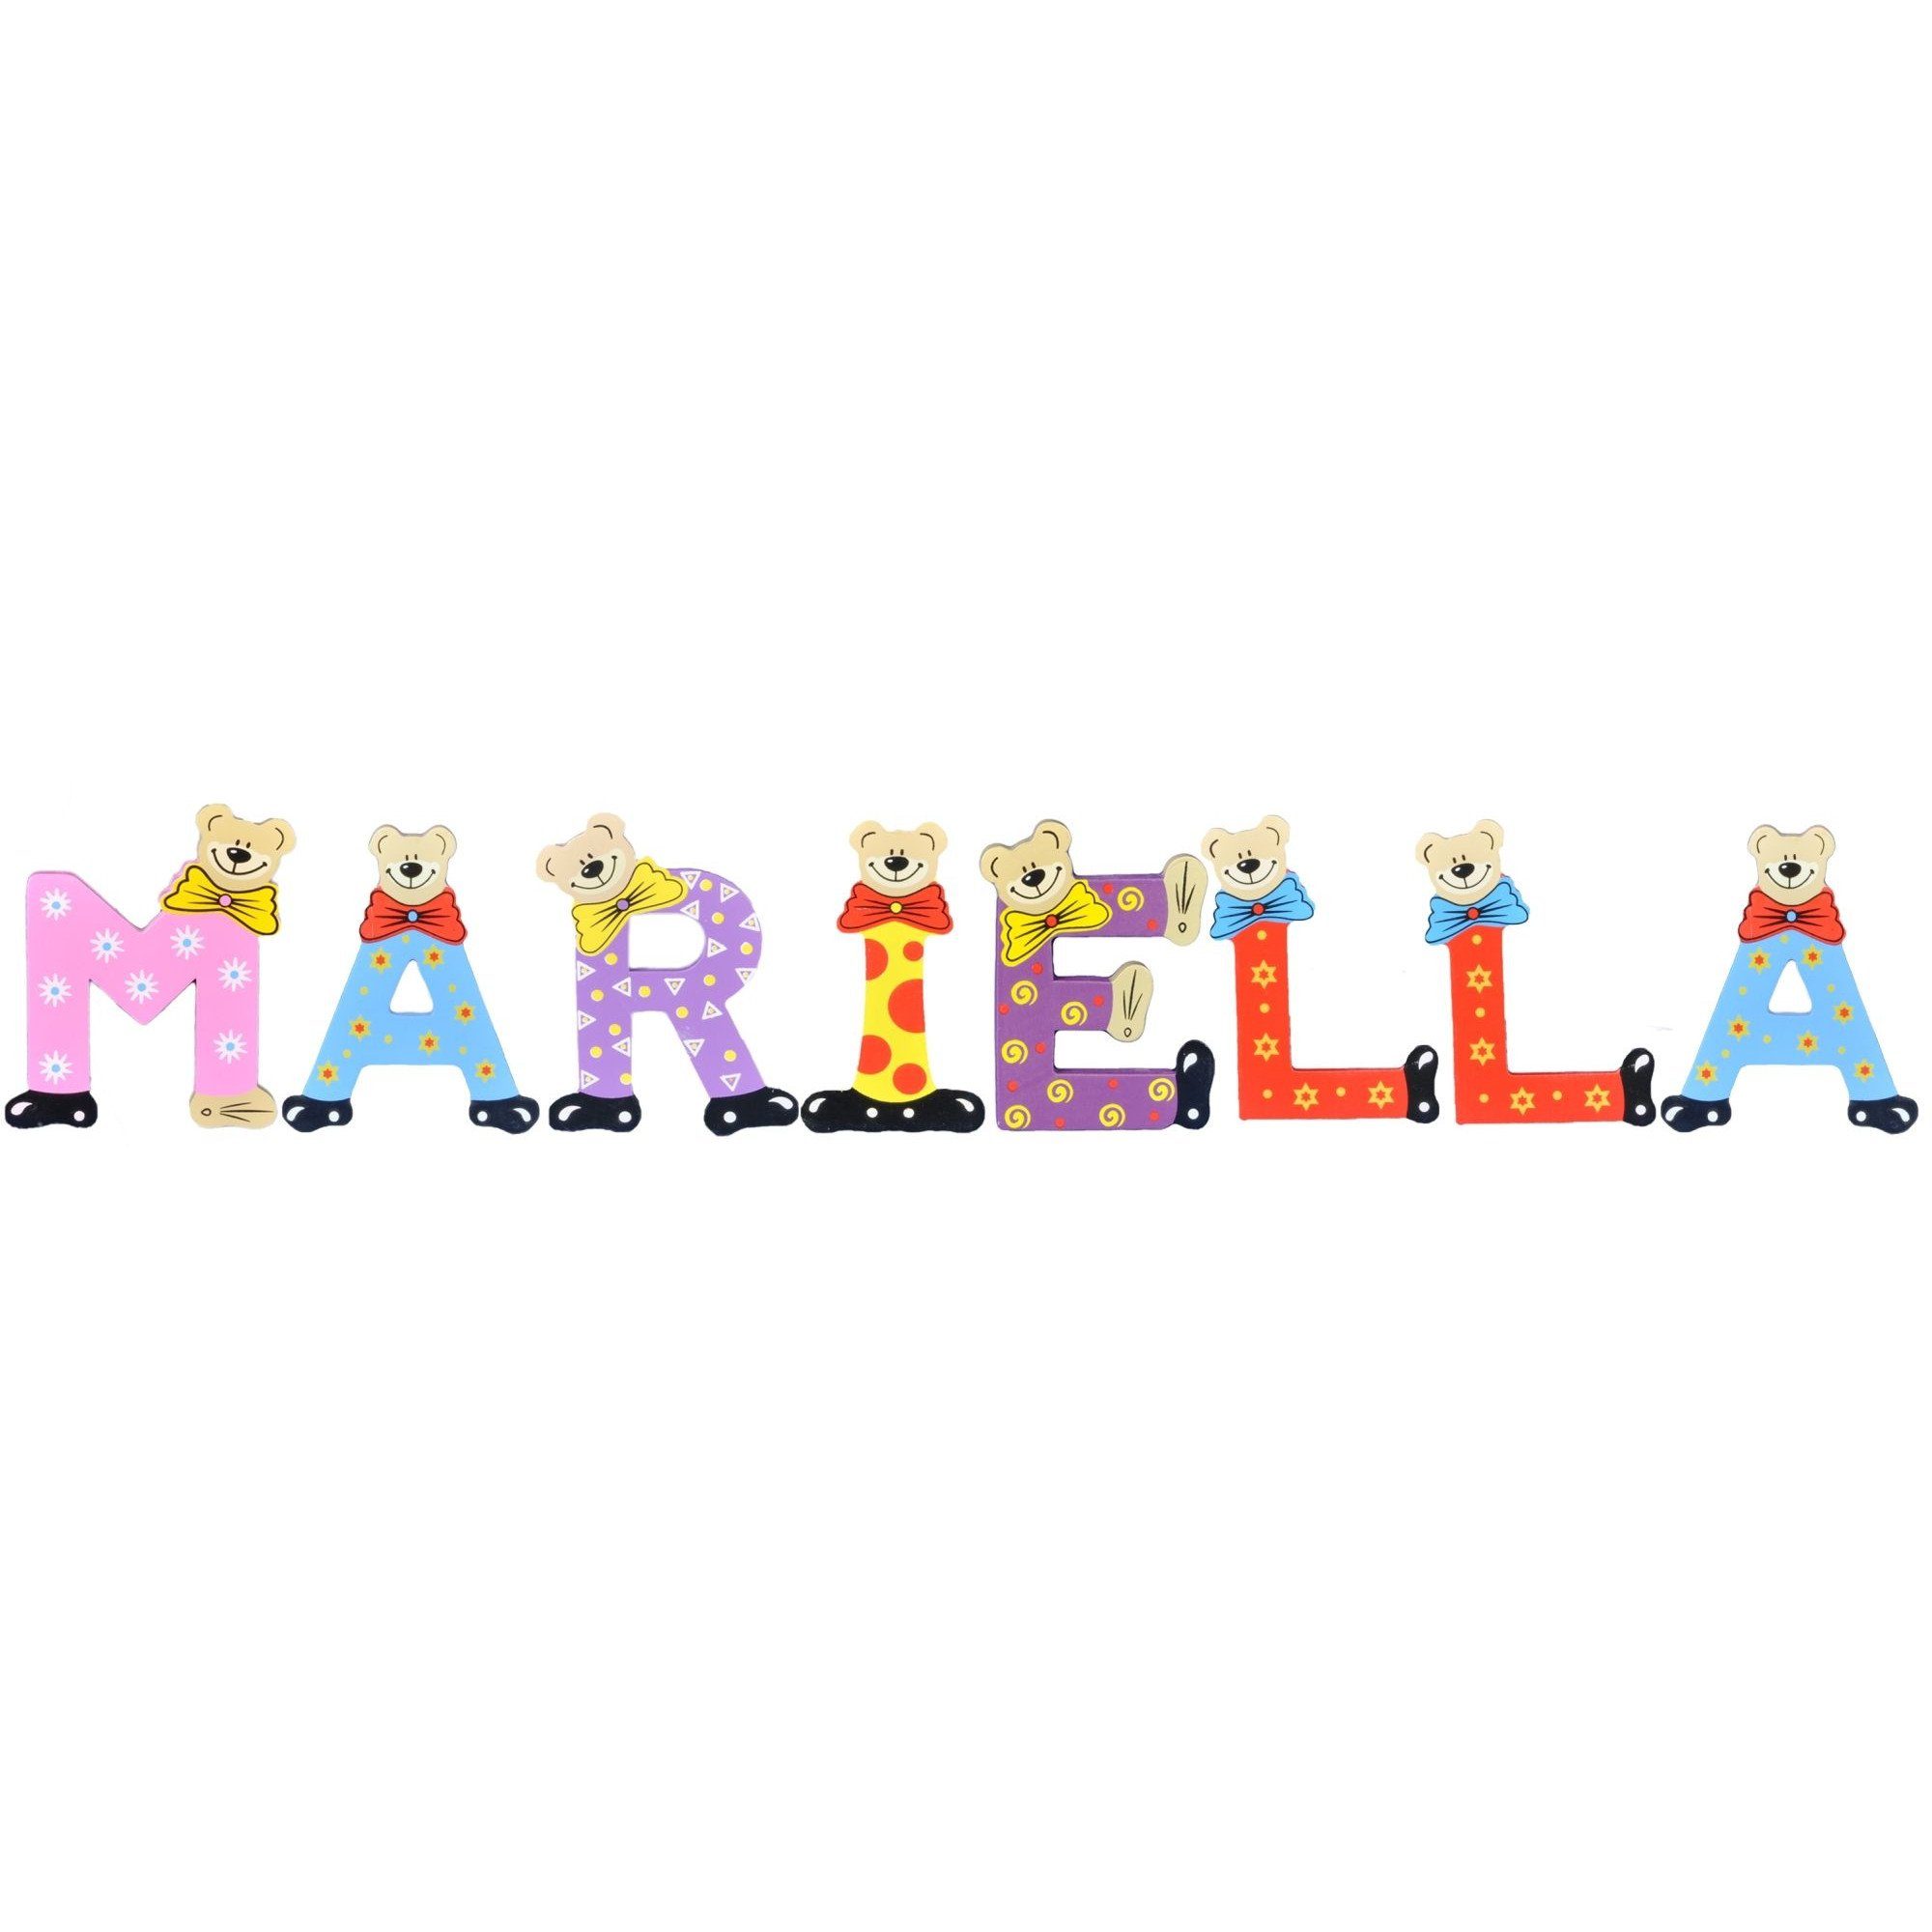 MARIELLA - Kinder (Set, St), 8 Deko-Buchstaben Playshoes Namen-Set, Holz-Buchstaben sortiert